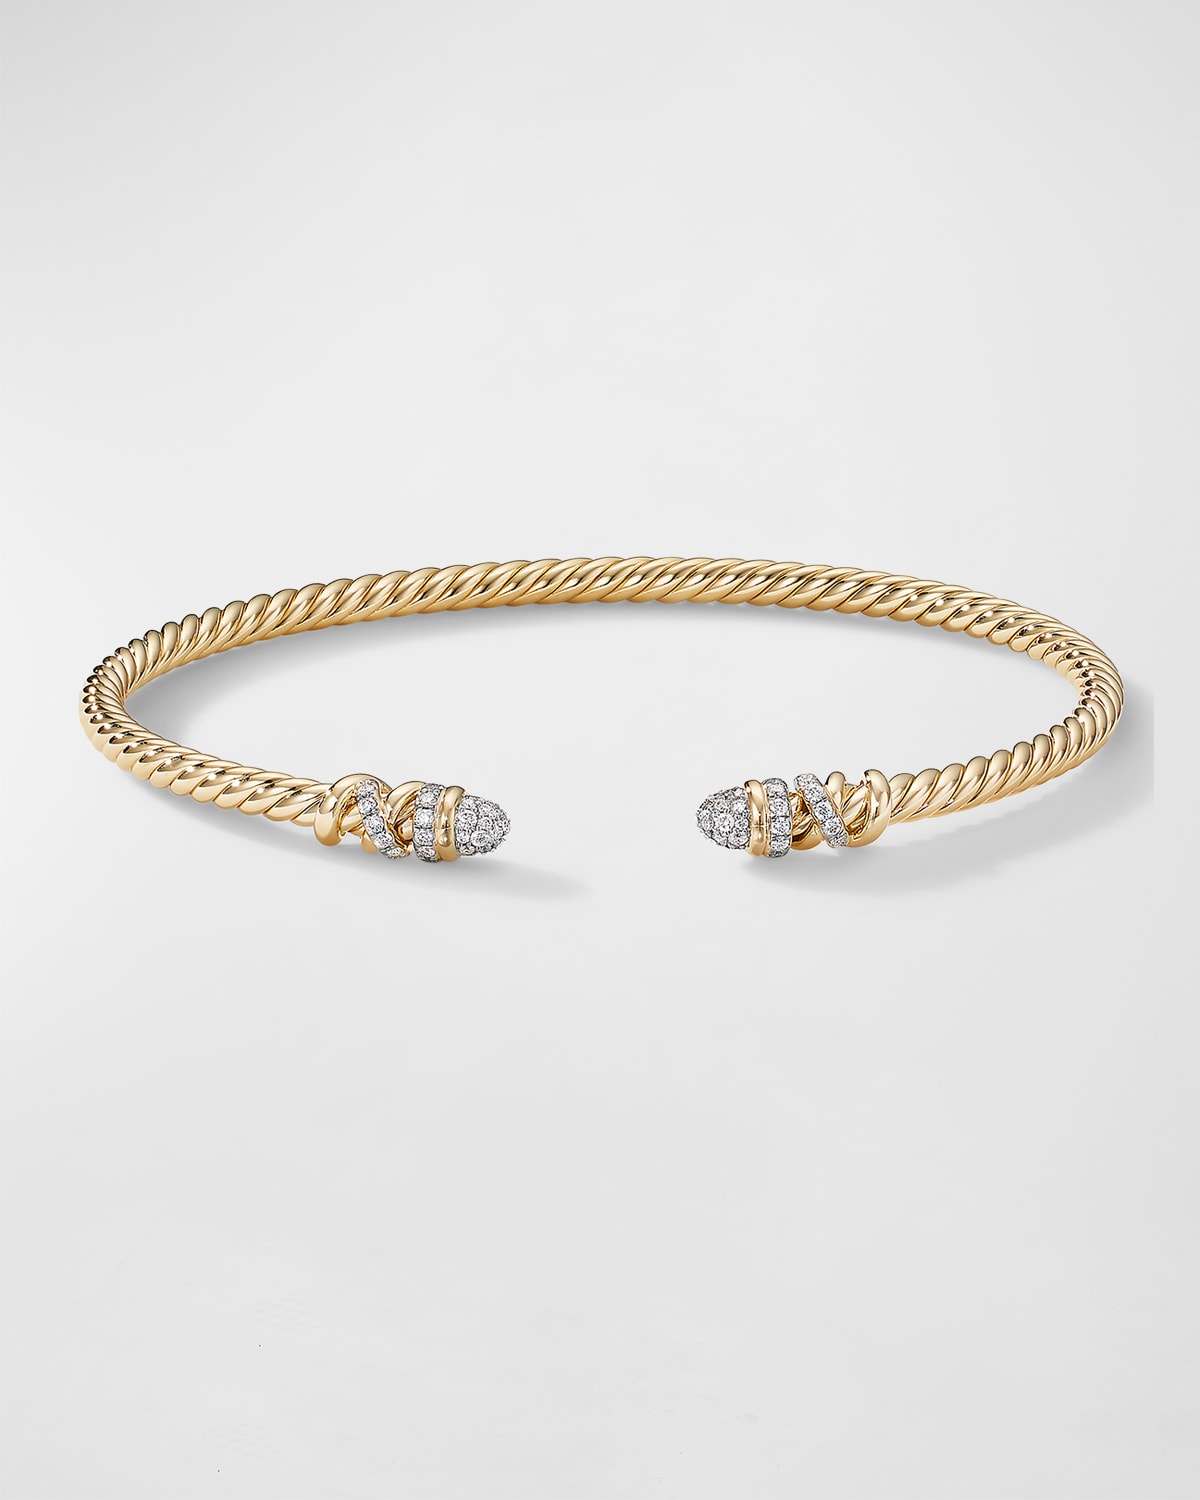 David Yurman Petite Helena Bracelet With Diamonds In 18k Gold, 3mm